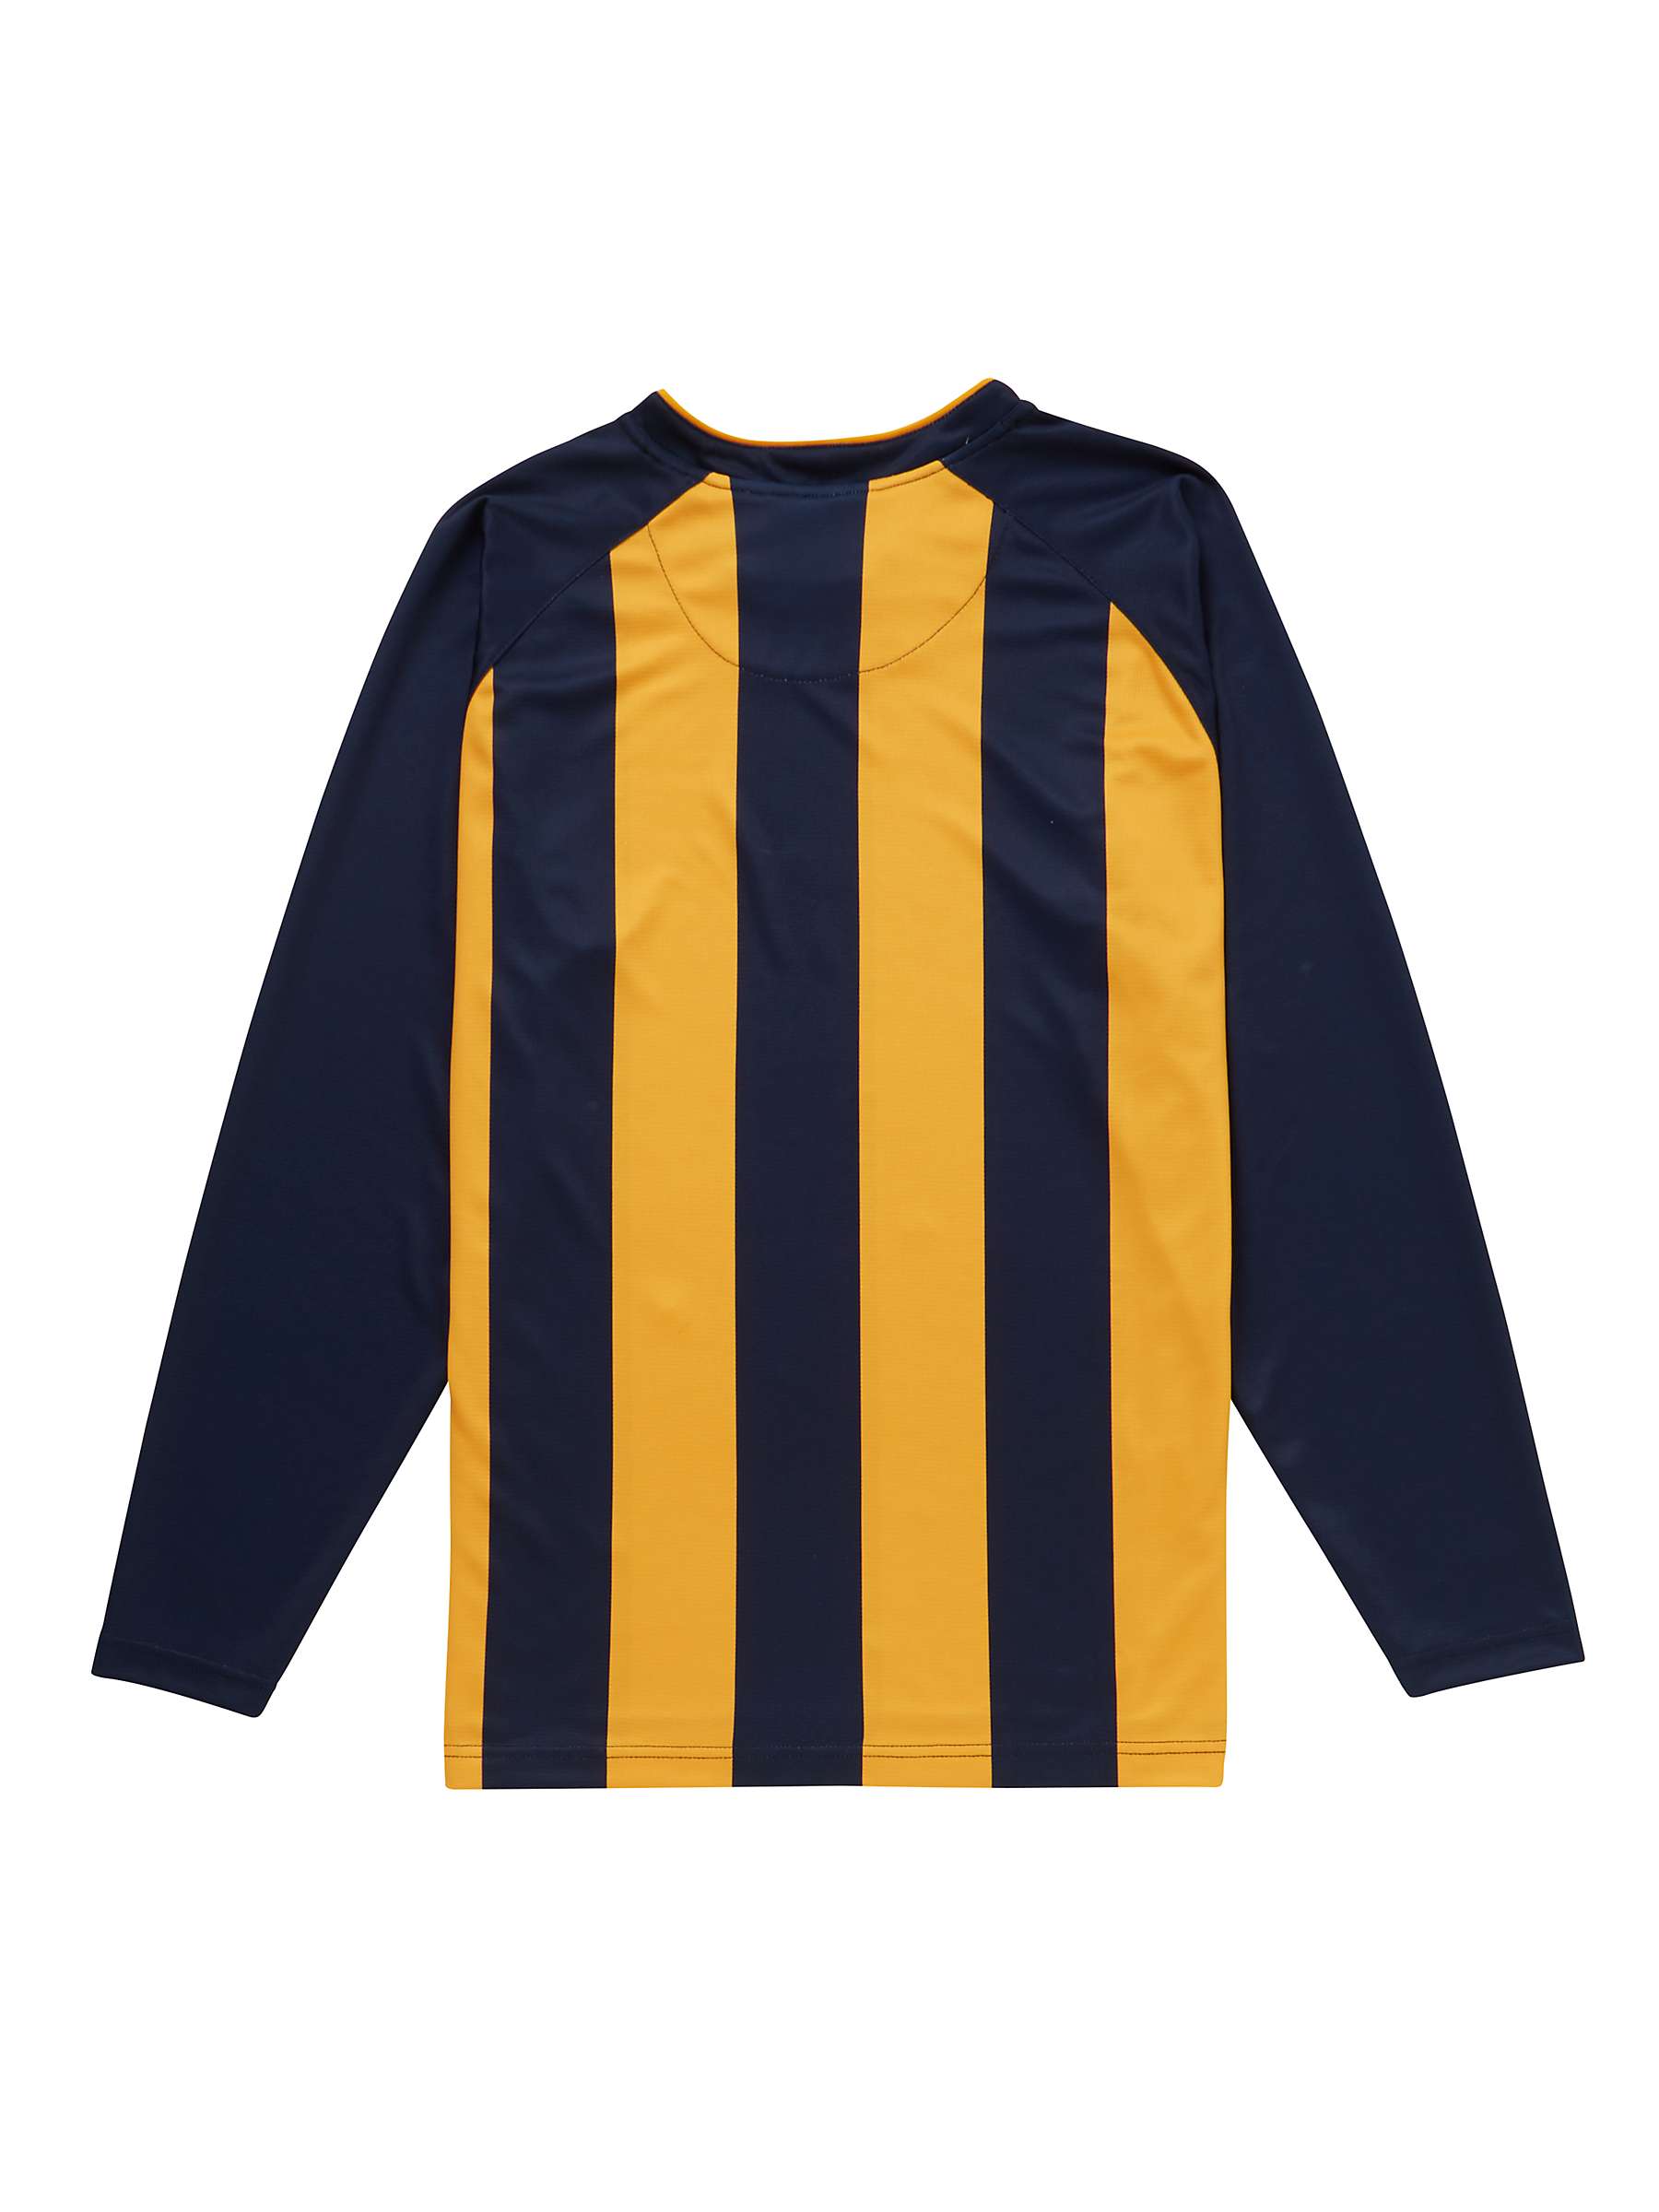 Buy Colfe's School Boys' Football Shirt, Navy/Amber Online at johnlewis.com